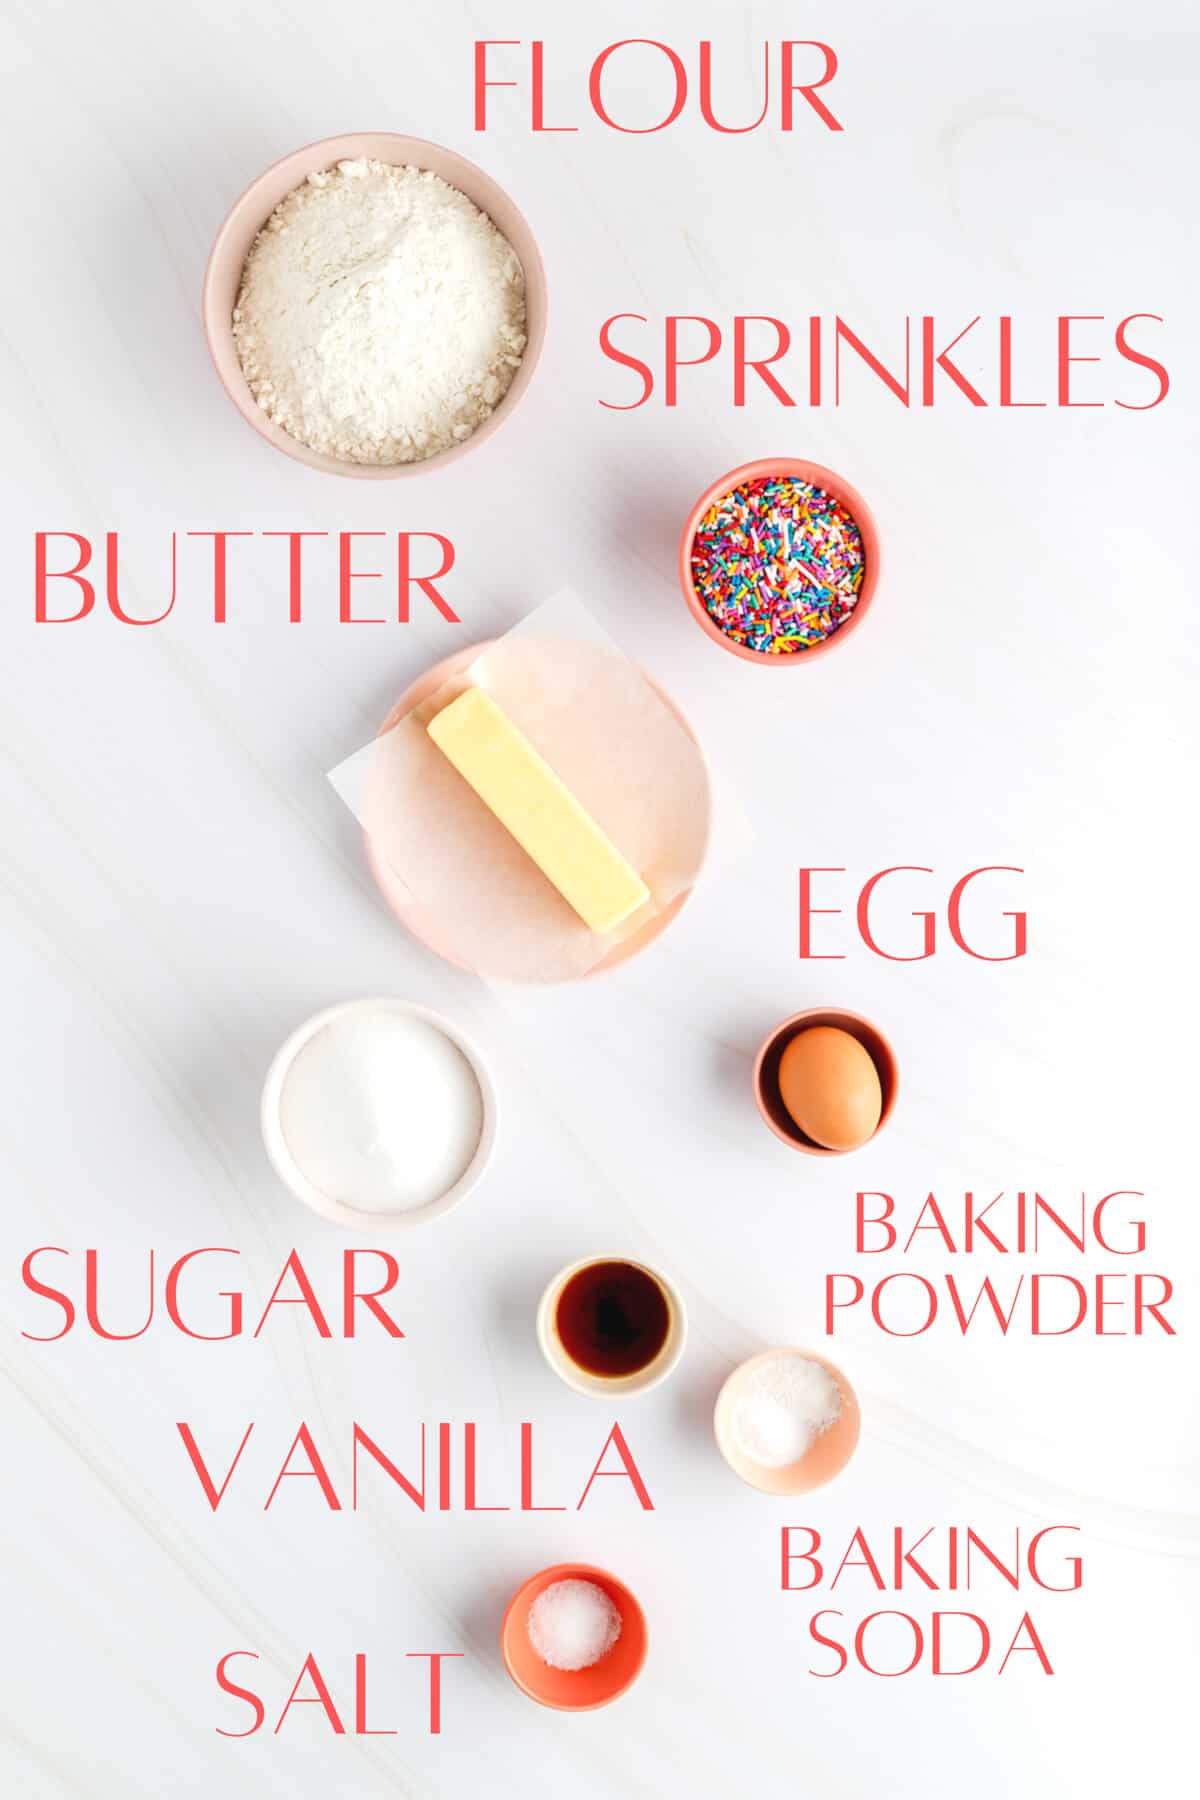 flour sprinkles butter egg sugar vanilla baking powder baking soda and salt in individual bowls.